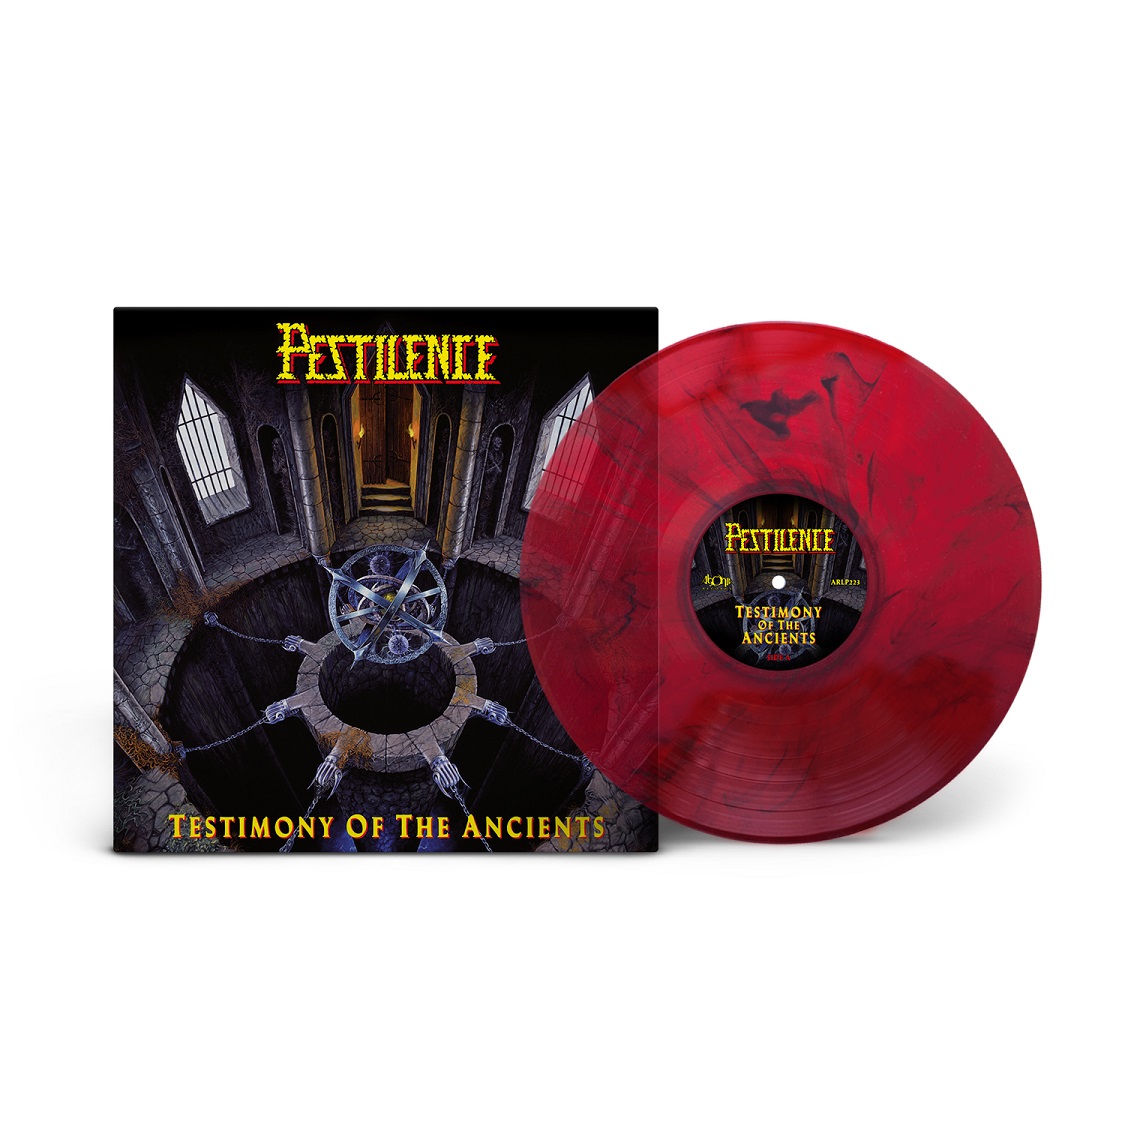 Pestilence - 'Testimony of the Ancients' Ltd Ed. LP